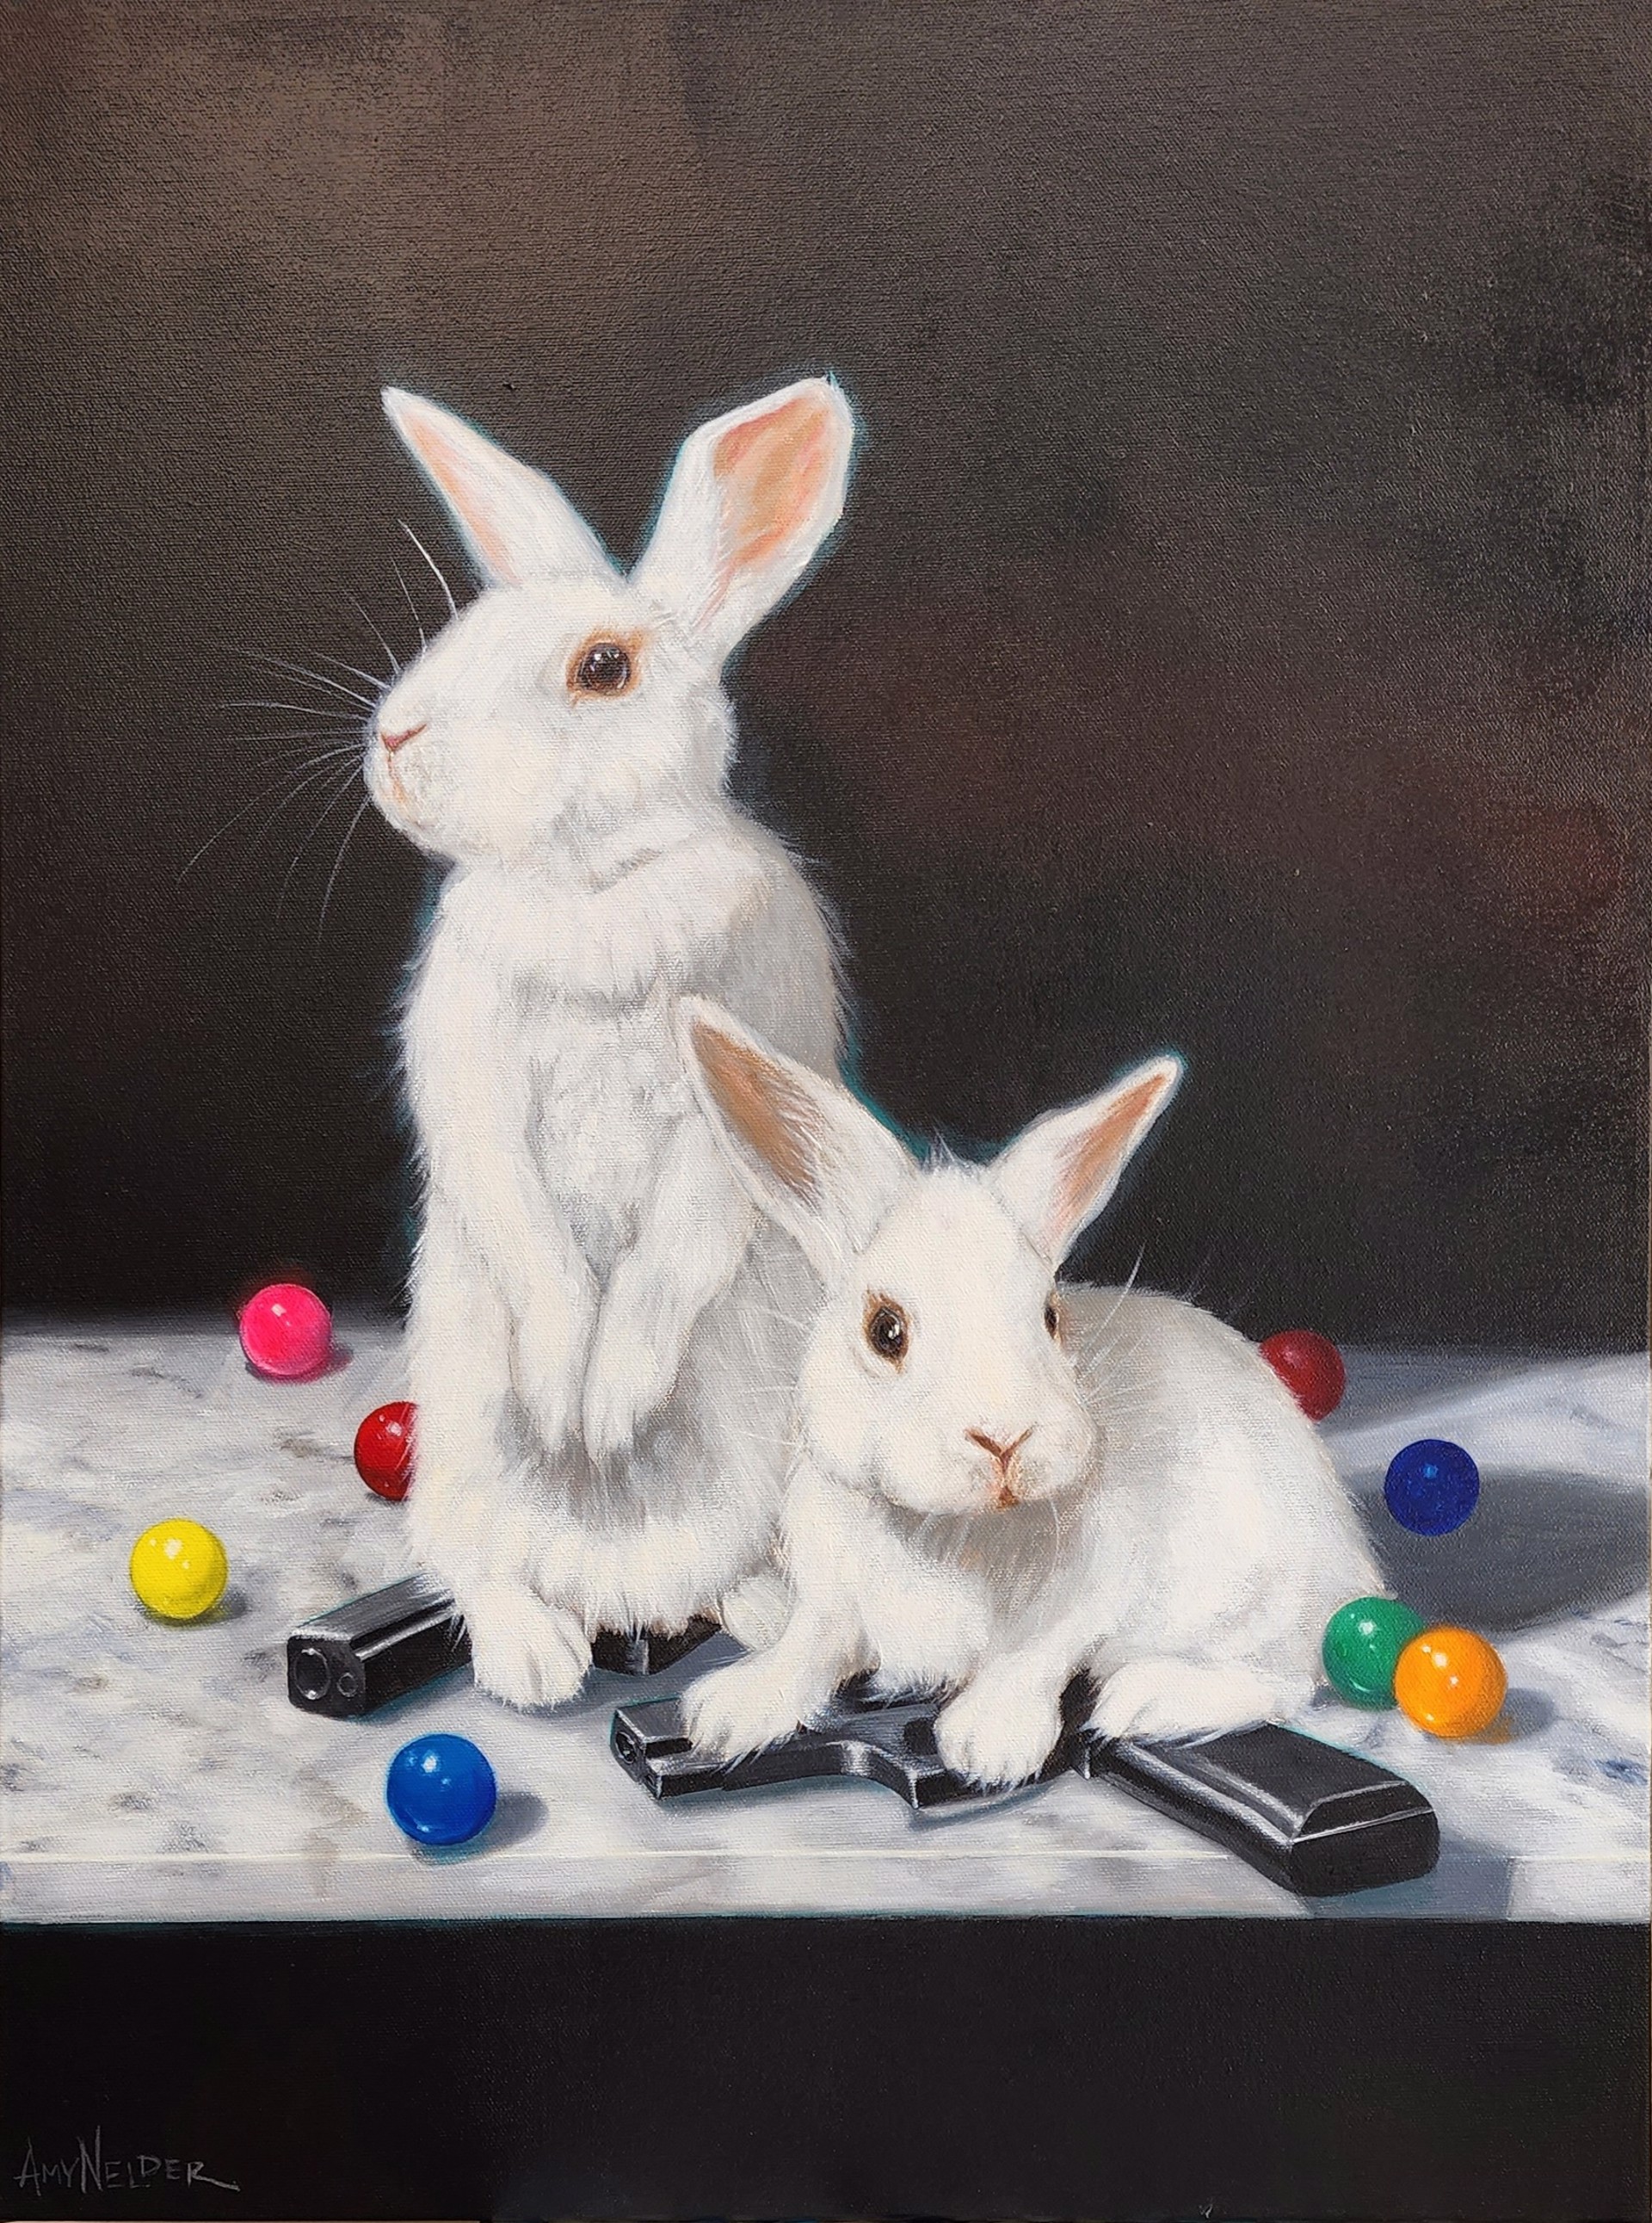 Bunnies and Guns #5 (Still life with soft bunnies, gumballs, handguns, and fear) by Amy Nelder